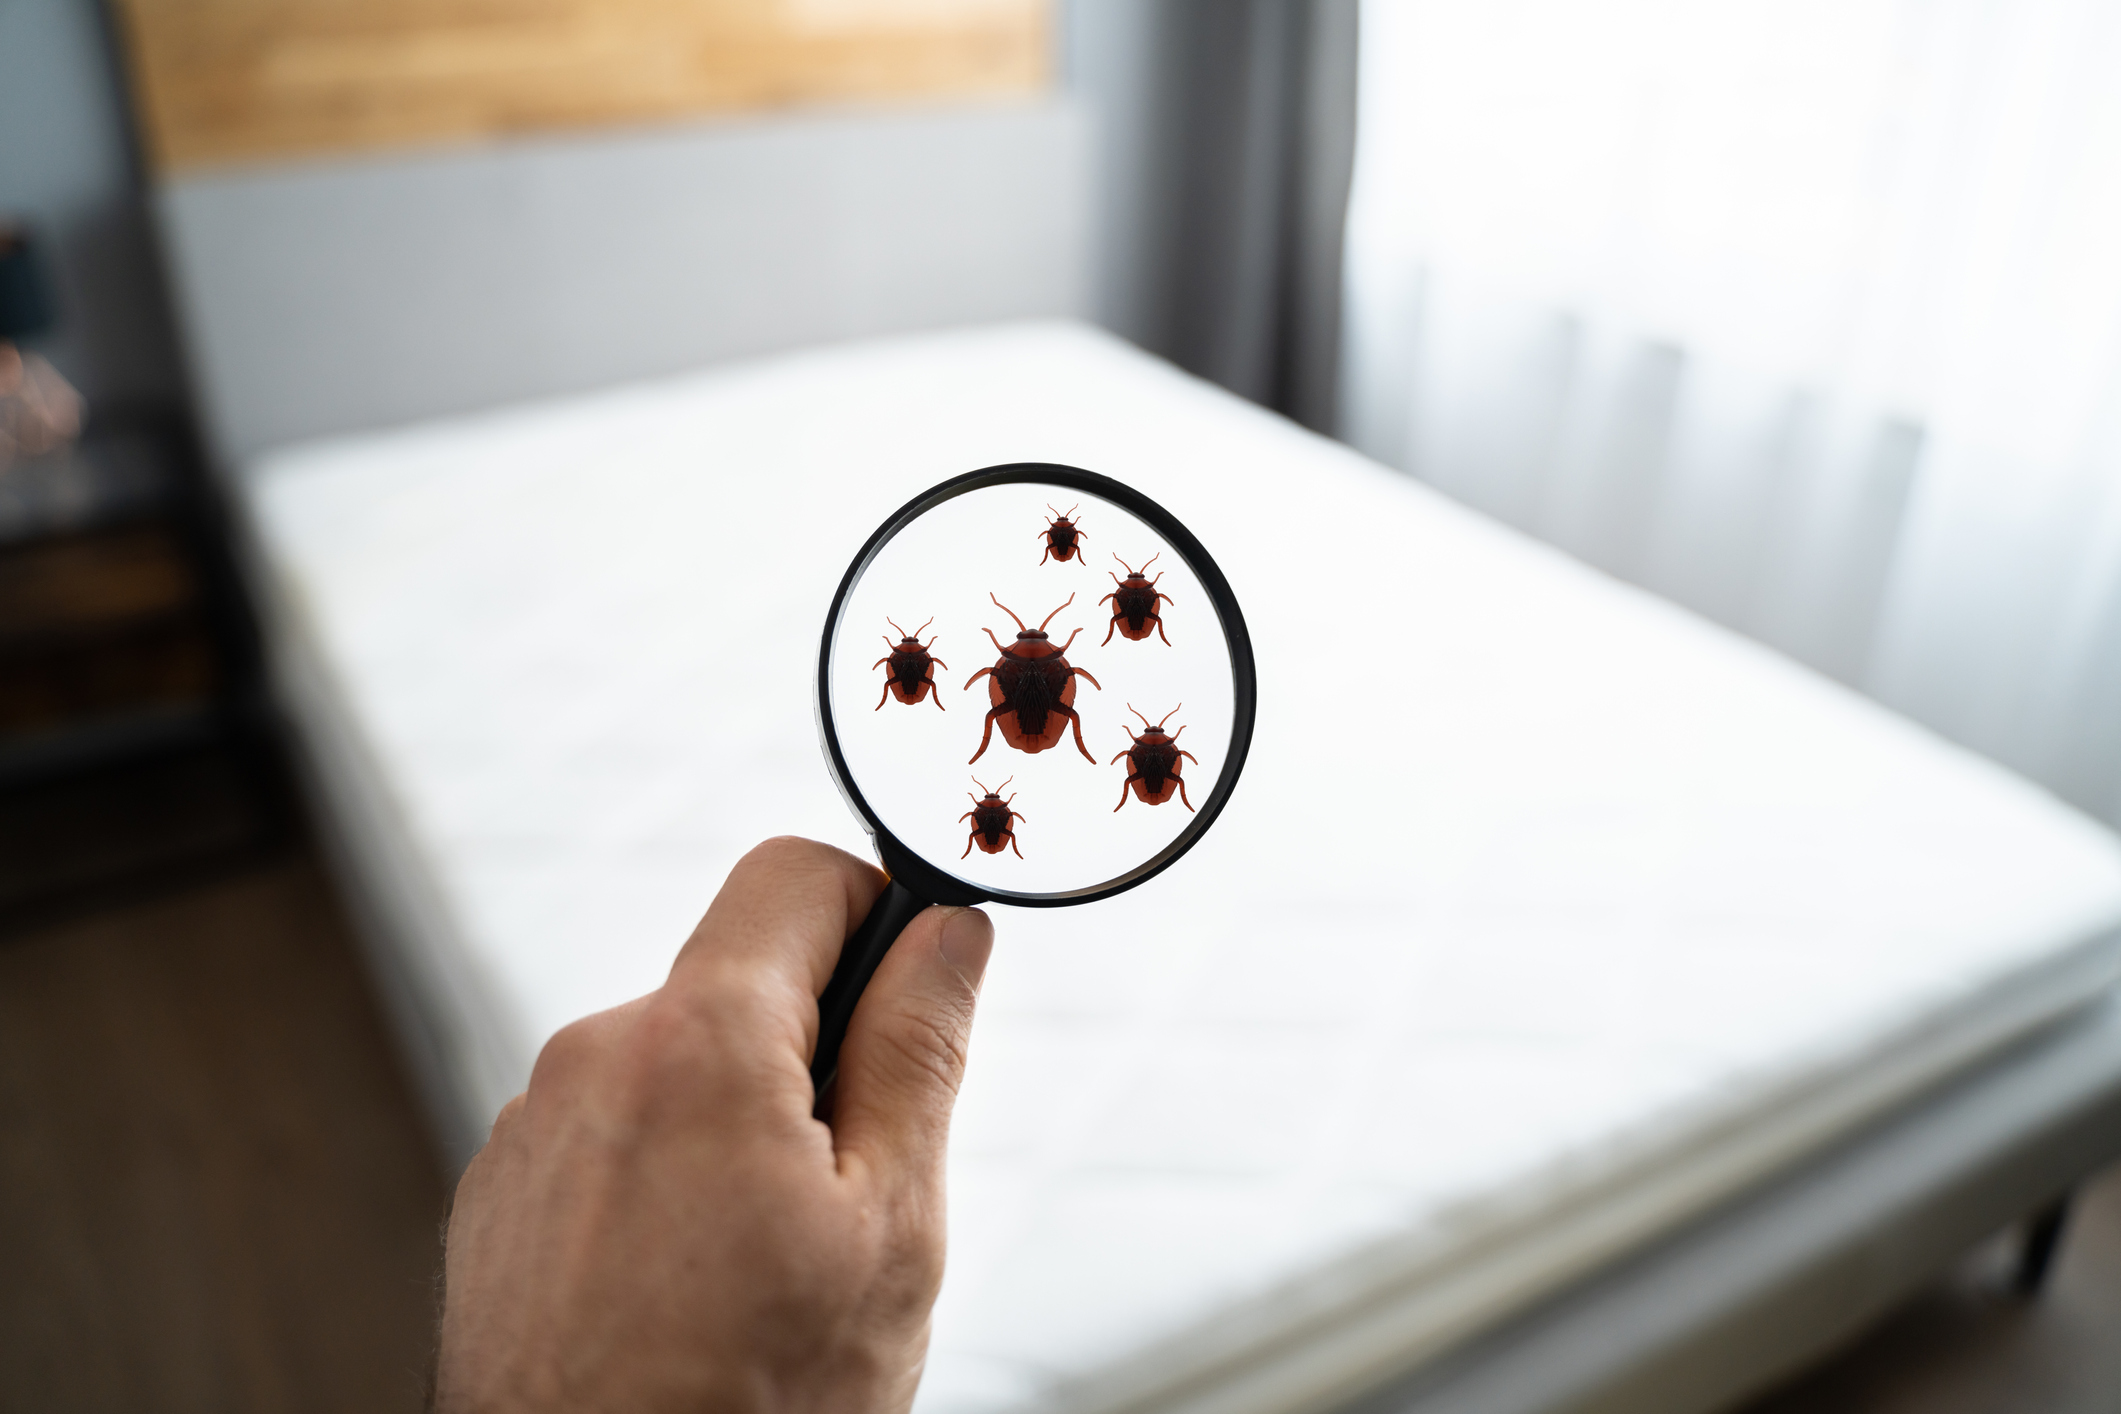 Bedbug Inspection